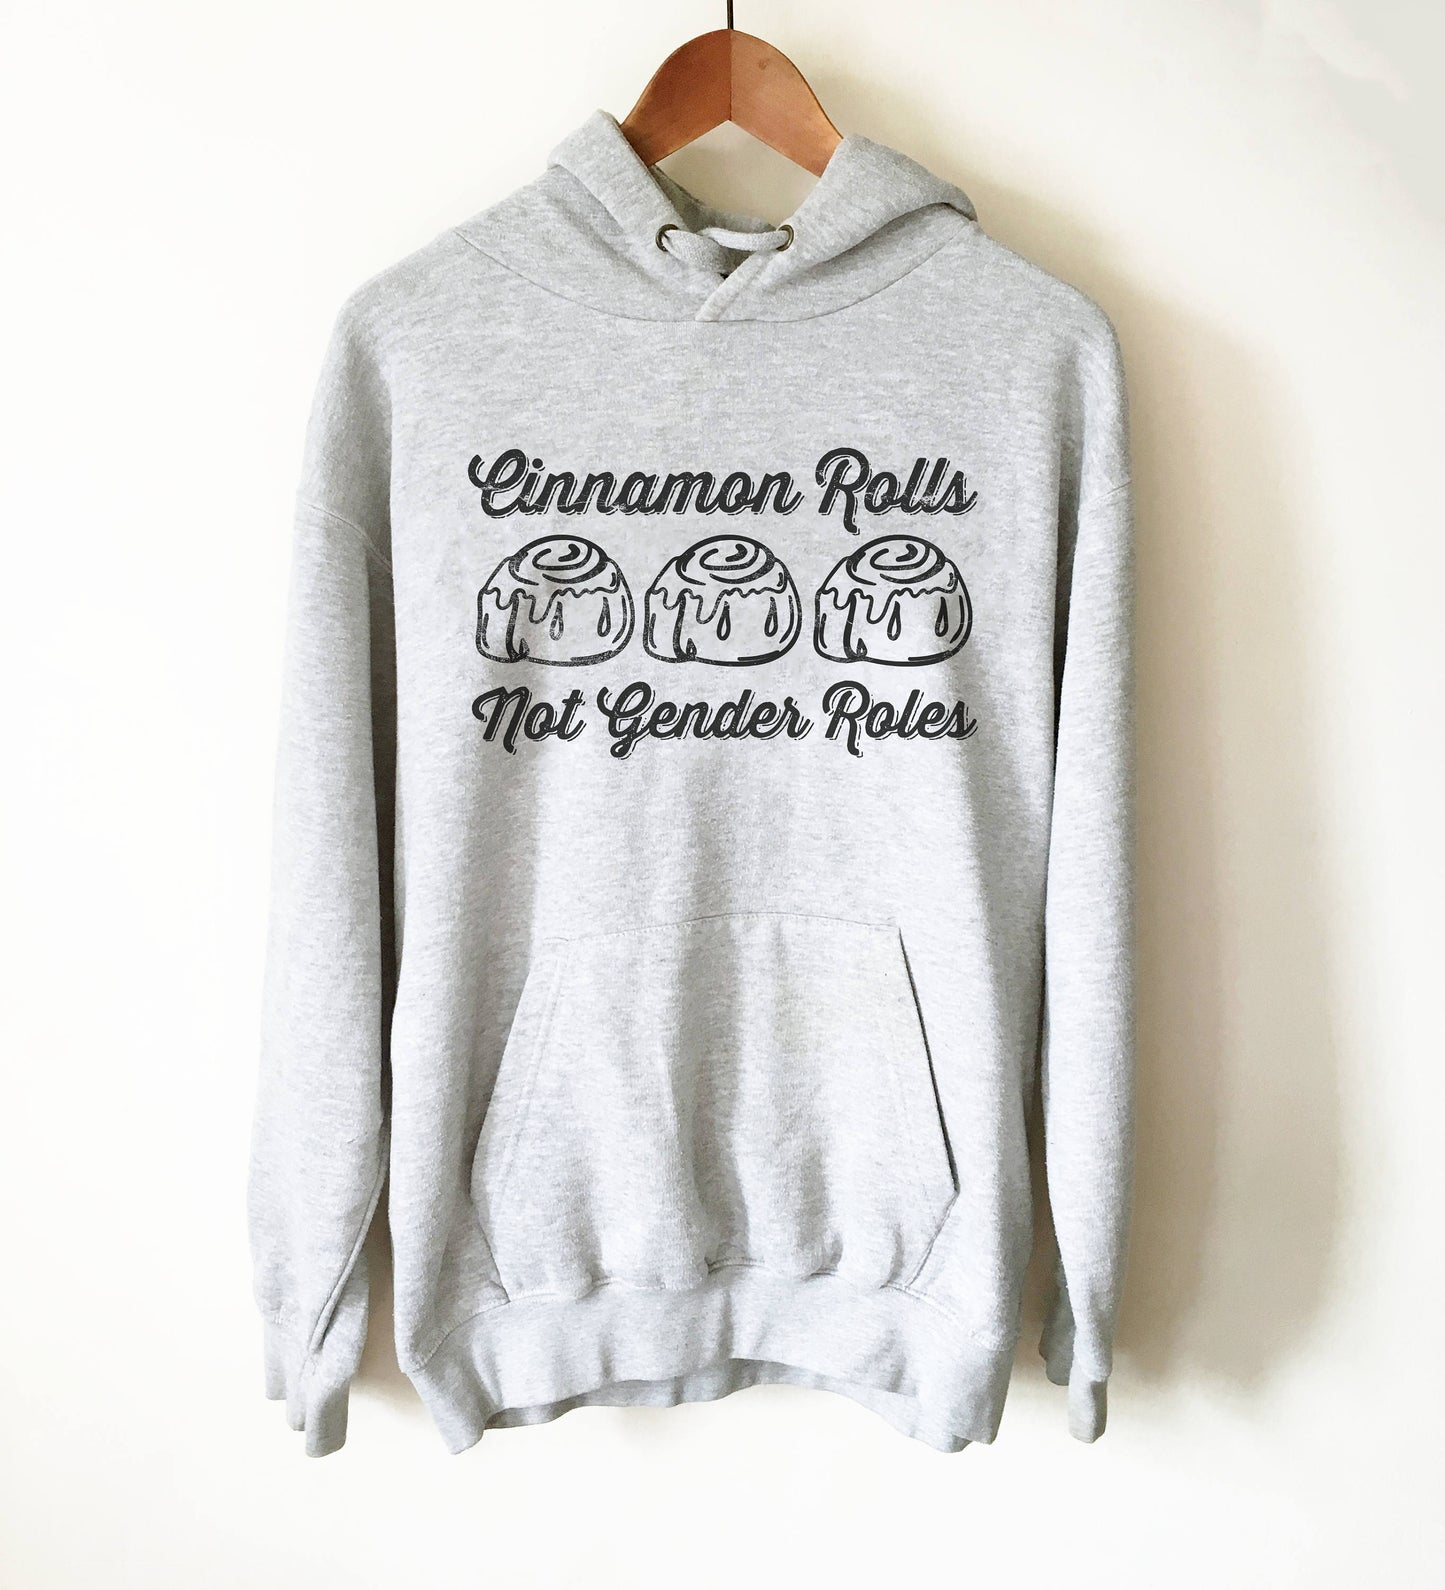 Cinnamon Rolls Not Gender Roles Hooded Sweatshirt - Feminist Shirt, Girl Power Shirt, Feminist Gift, The Future Is Female, Feminist Quote